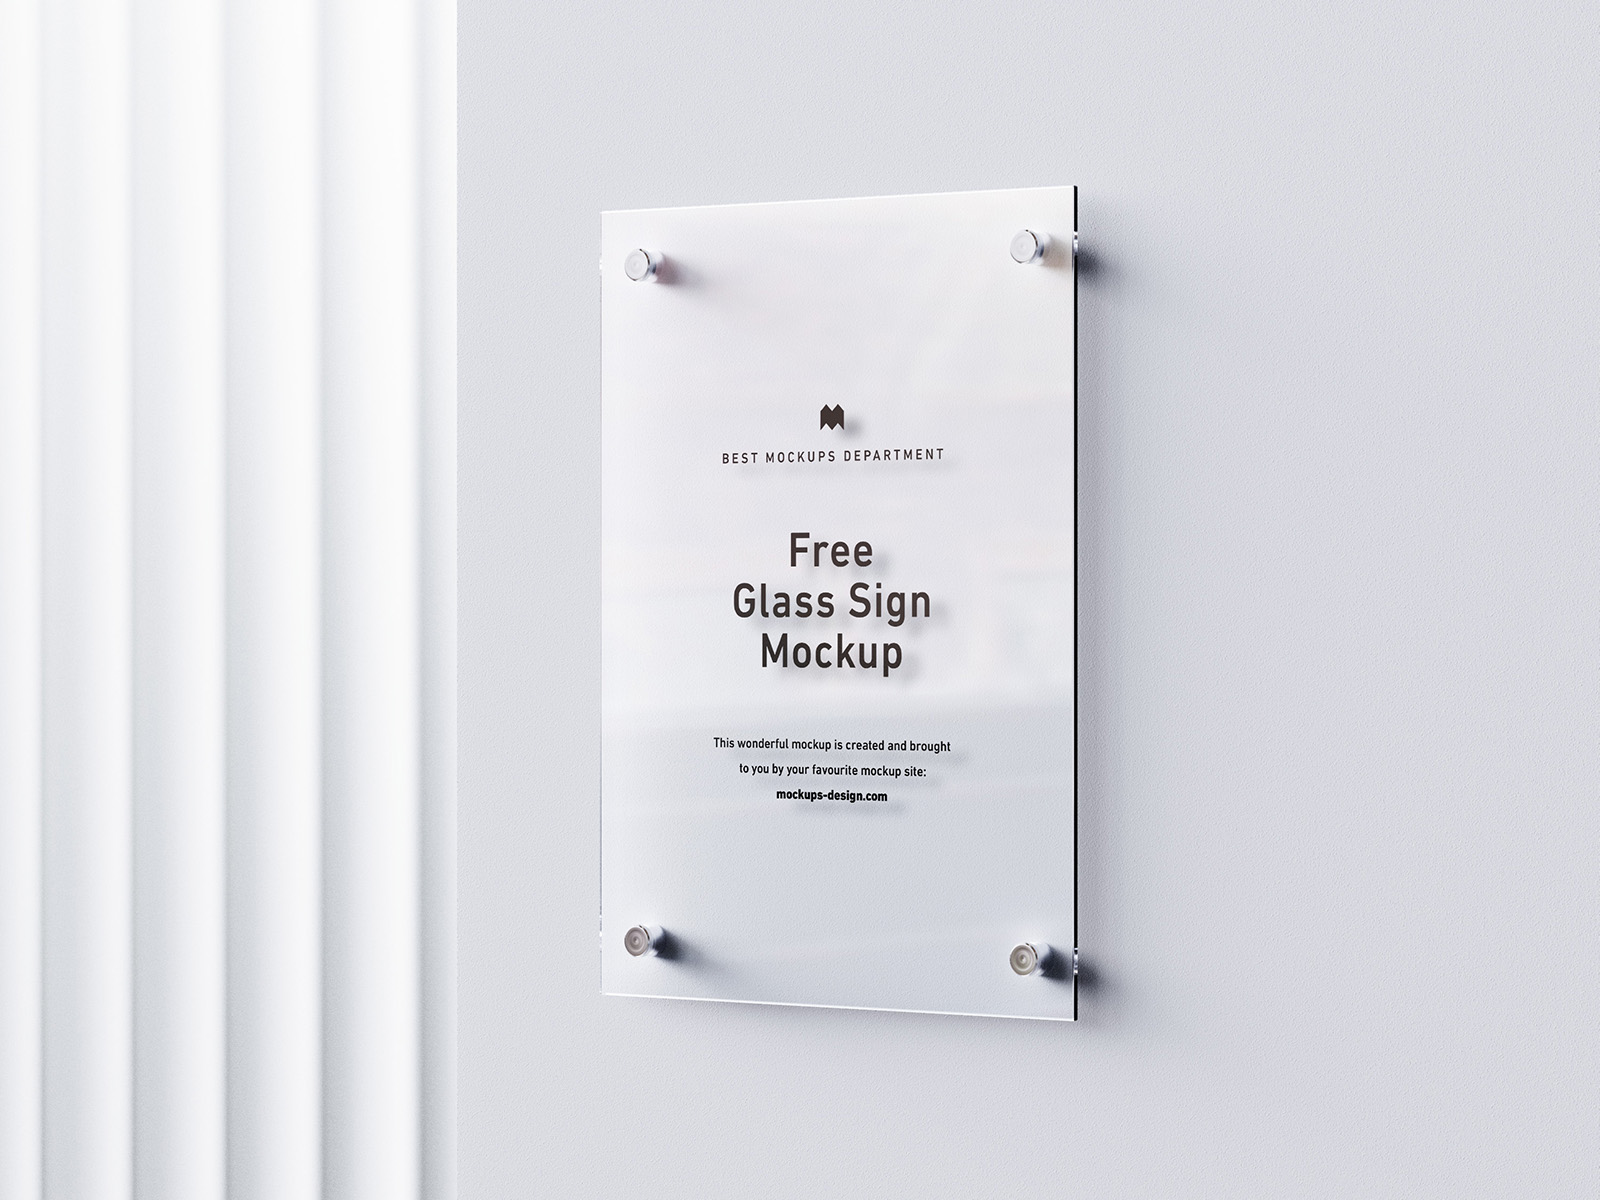 Free glass sign mockup